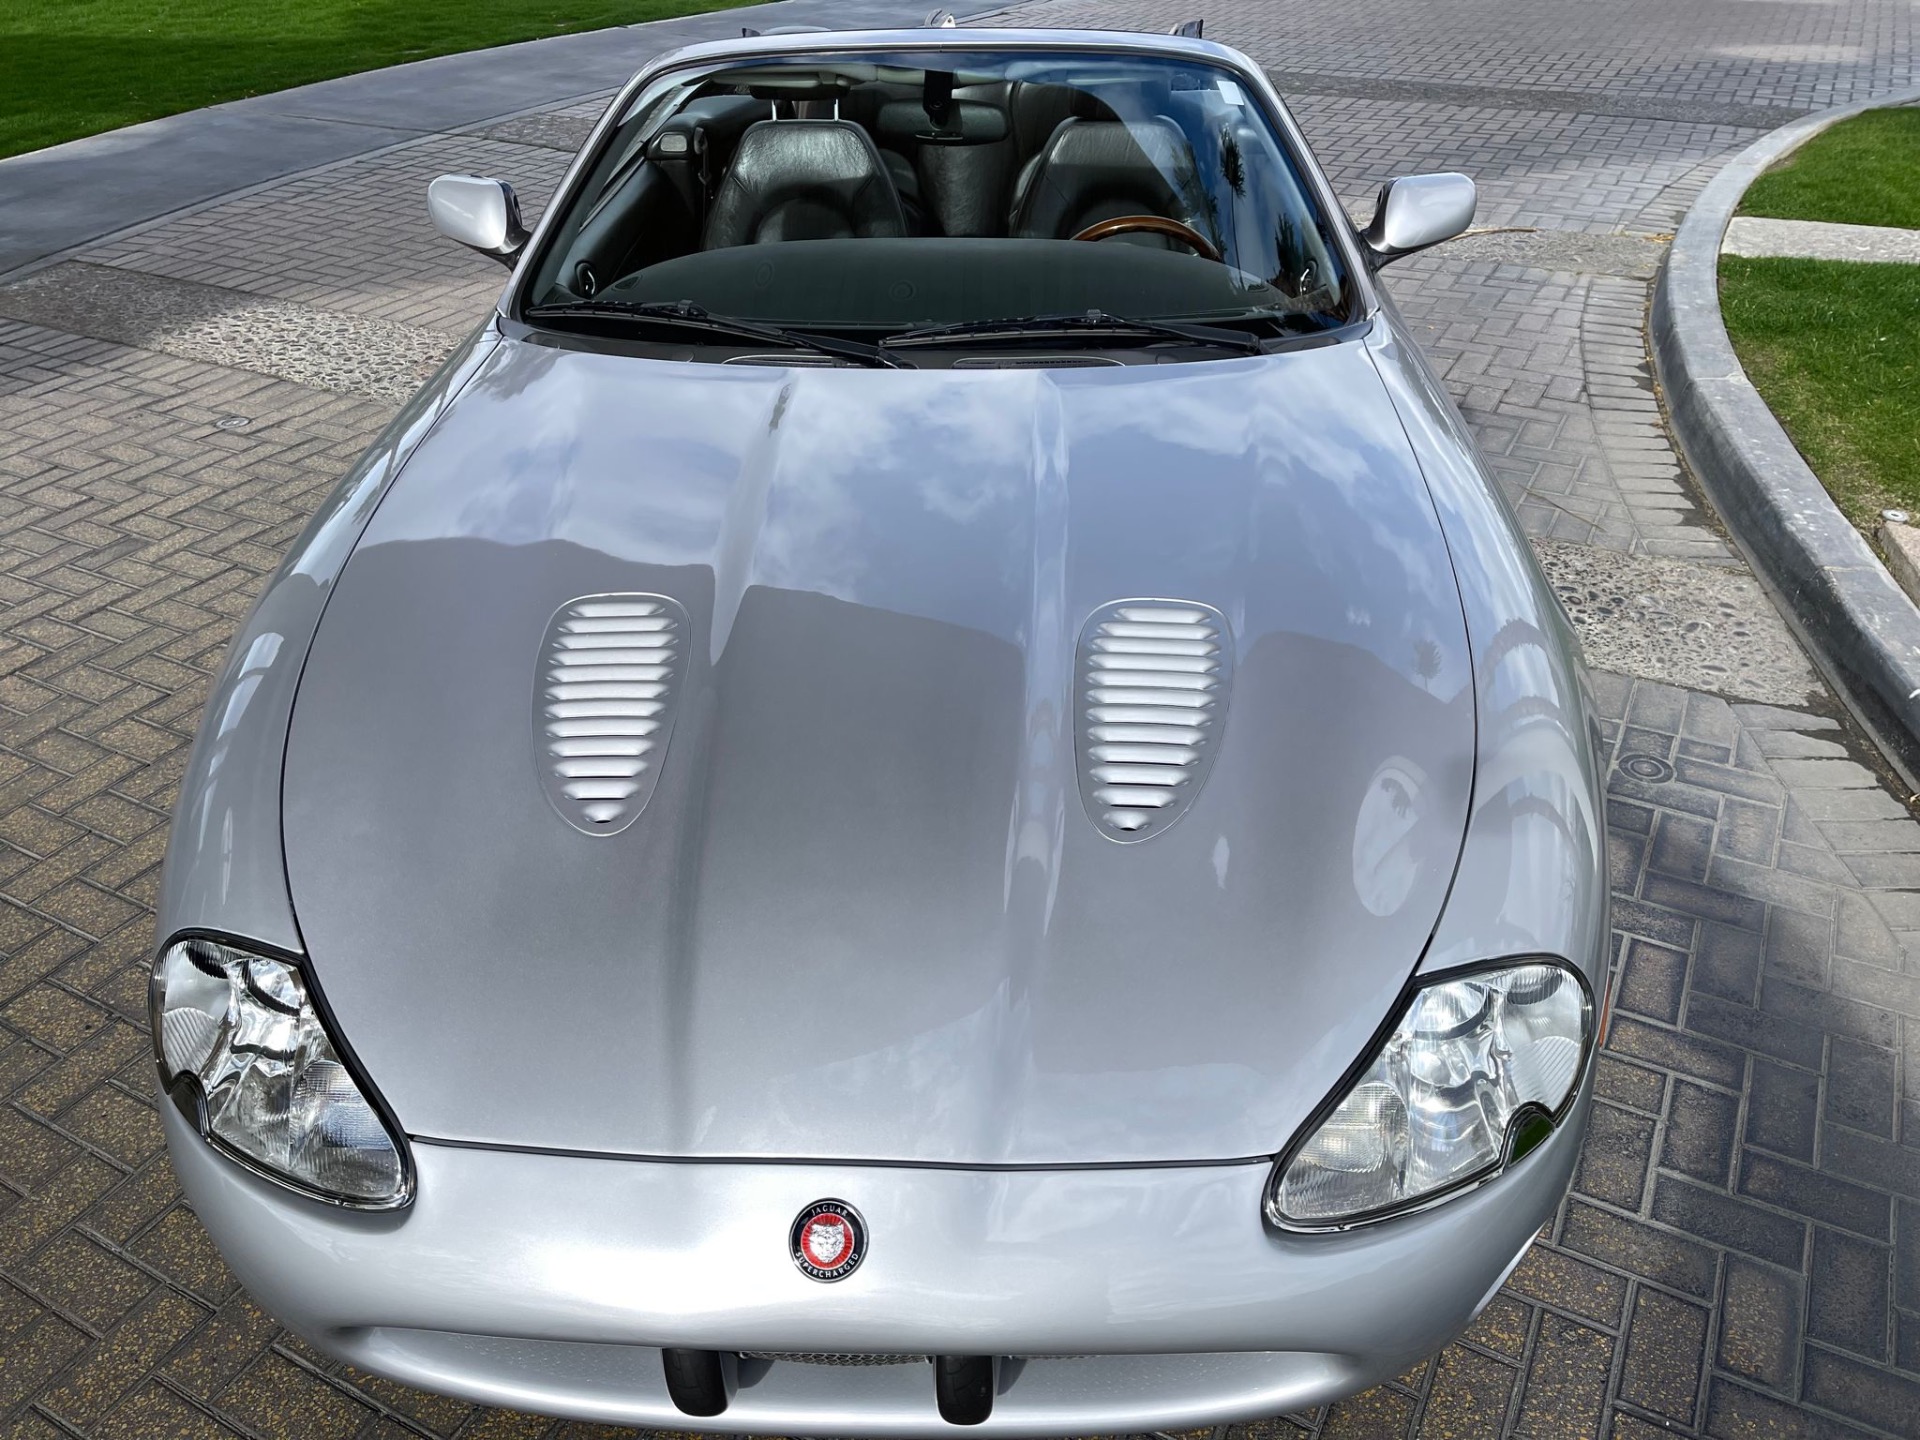 Used-2001-Jaguar-XKR